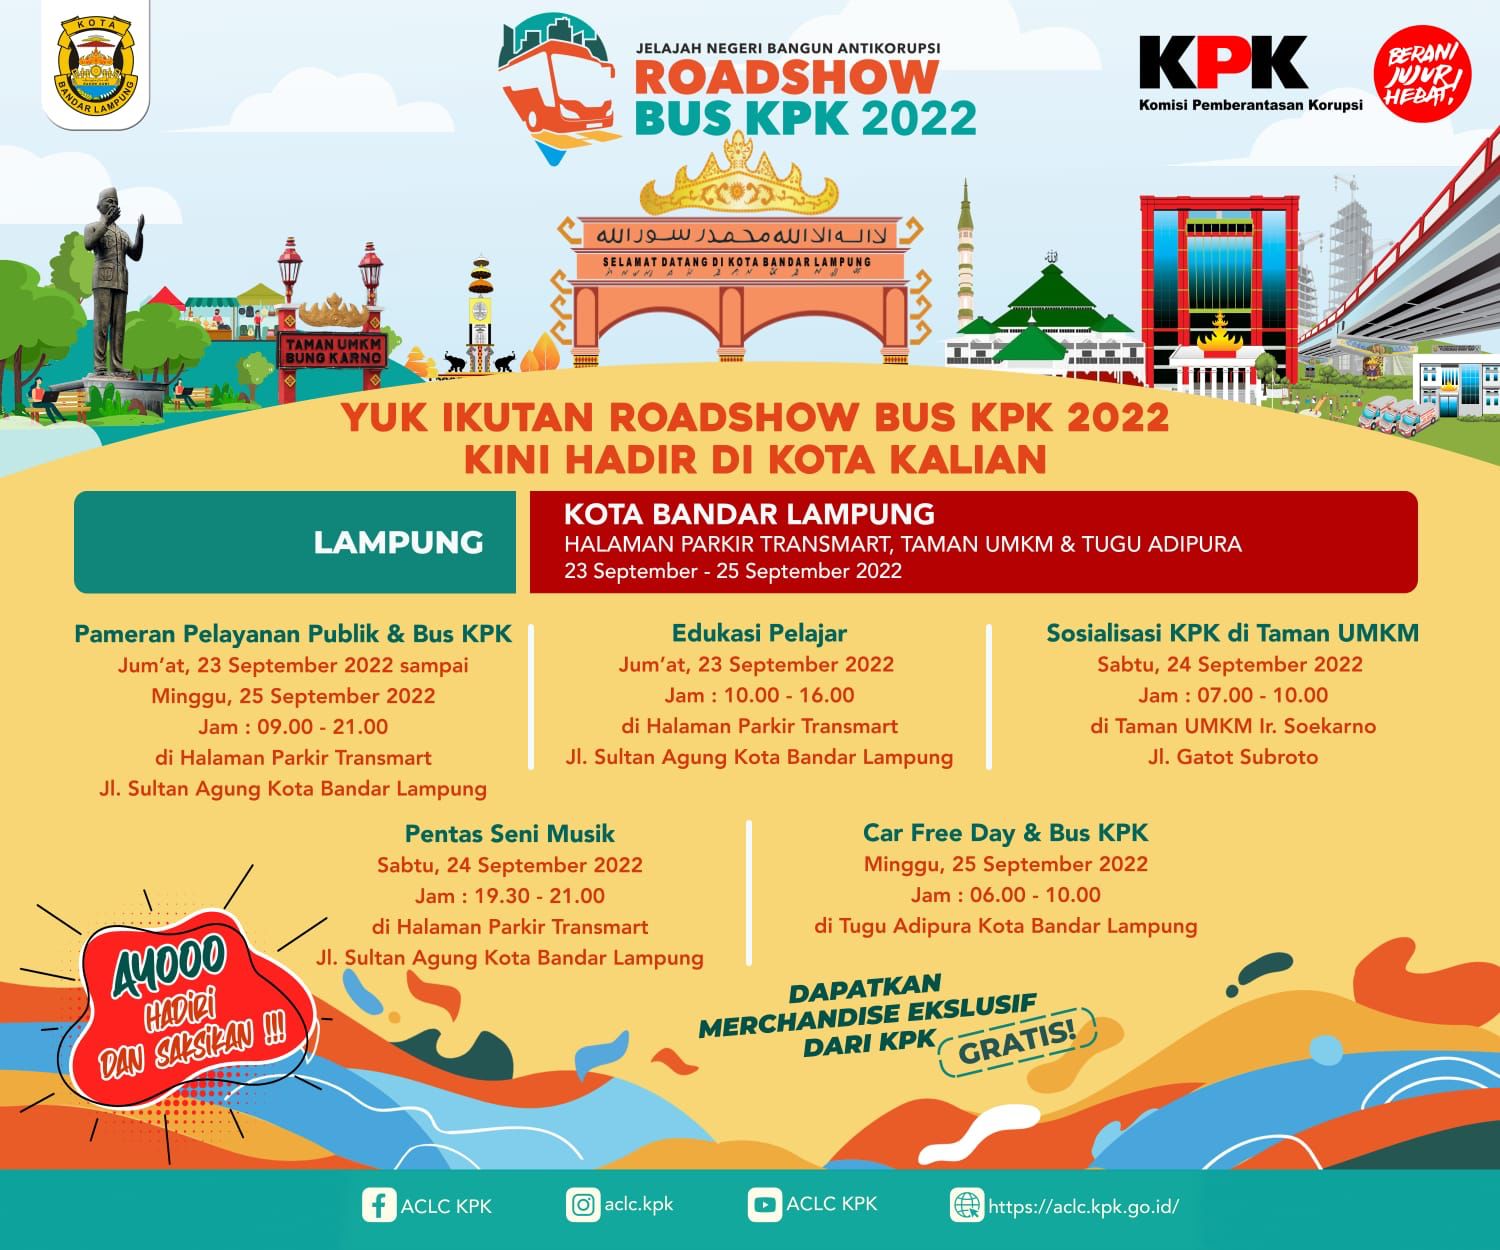 Roadshow Bus KPK Siap Mengaspal di Kota Bandarlampung Untuk Sebarkan Semangat Antikorupsi